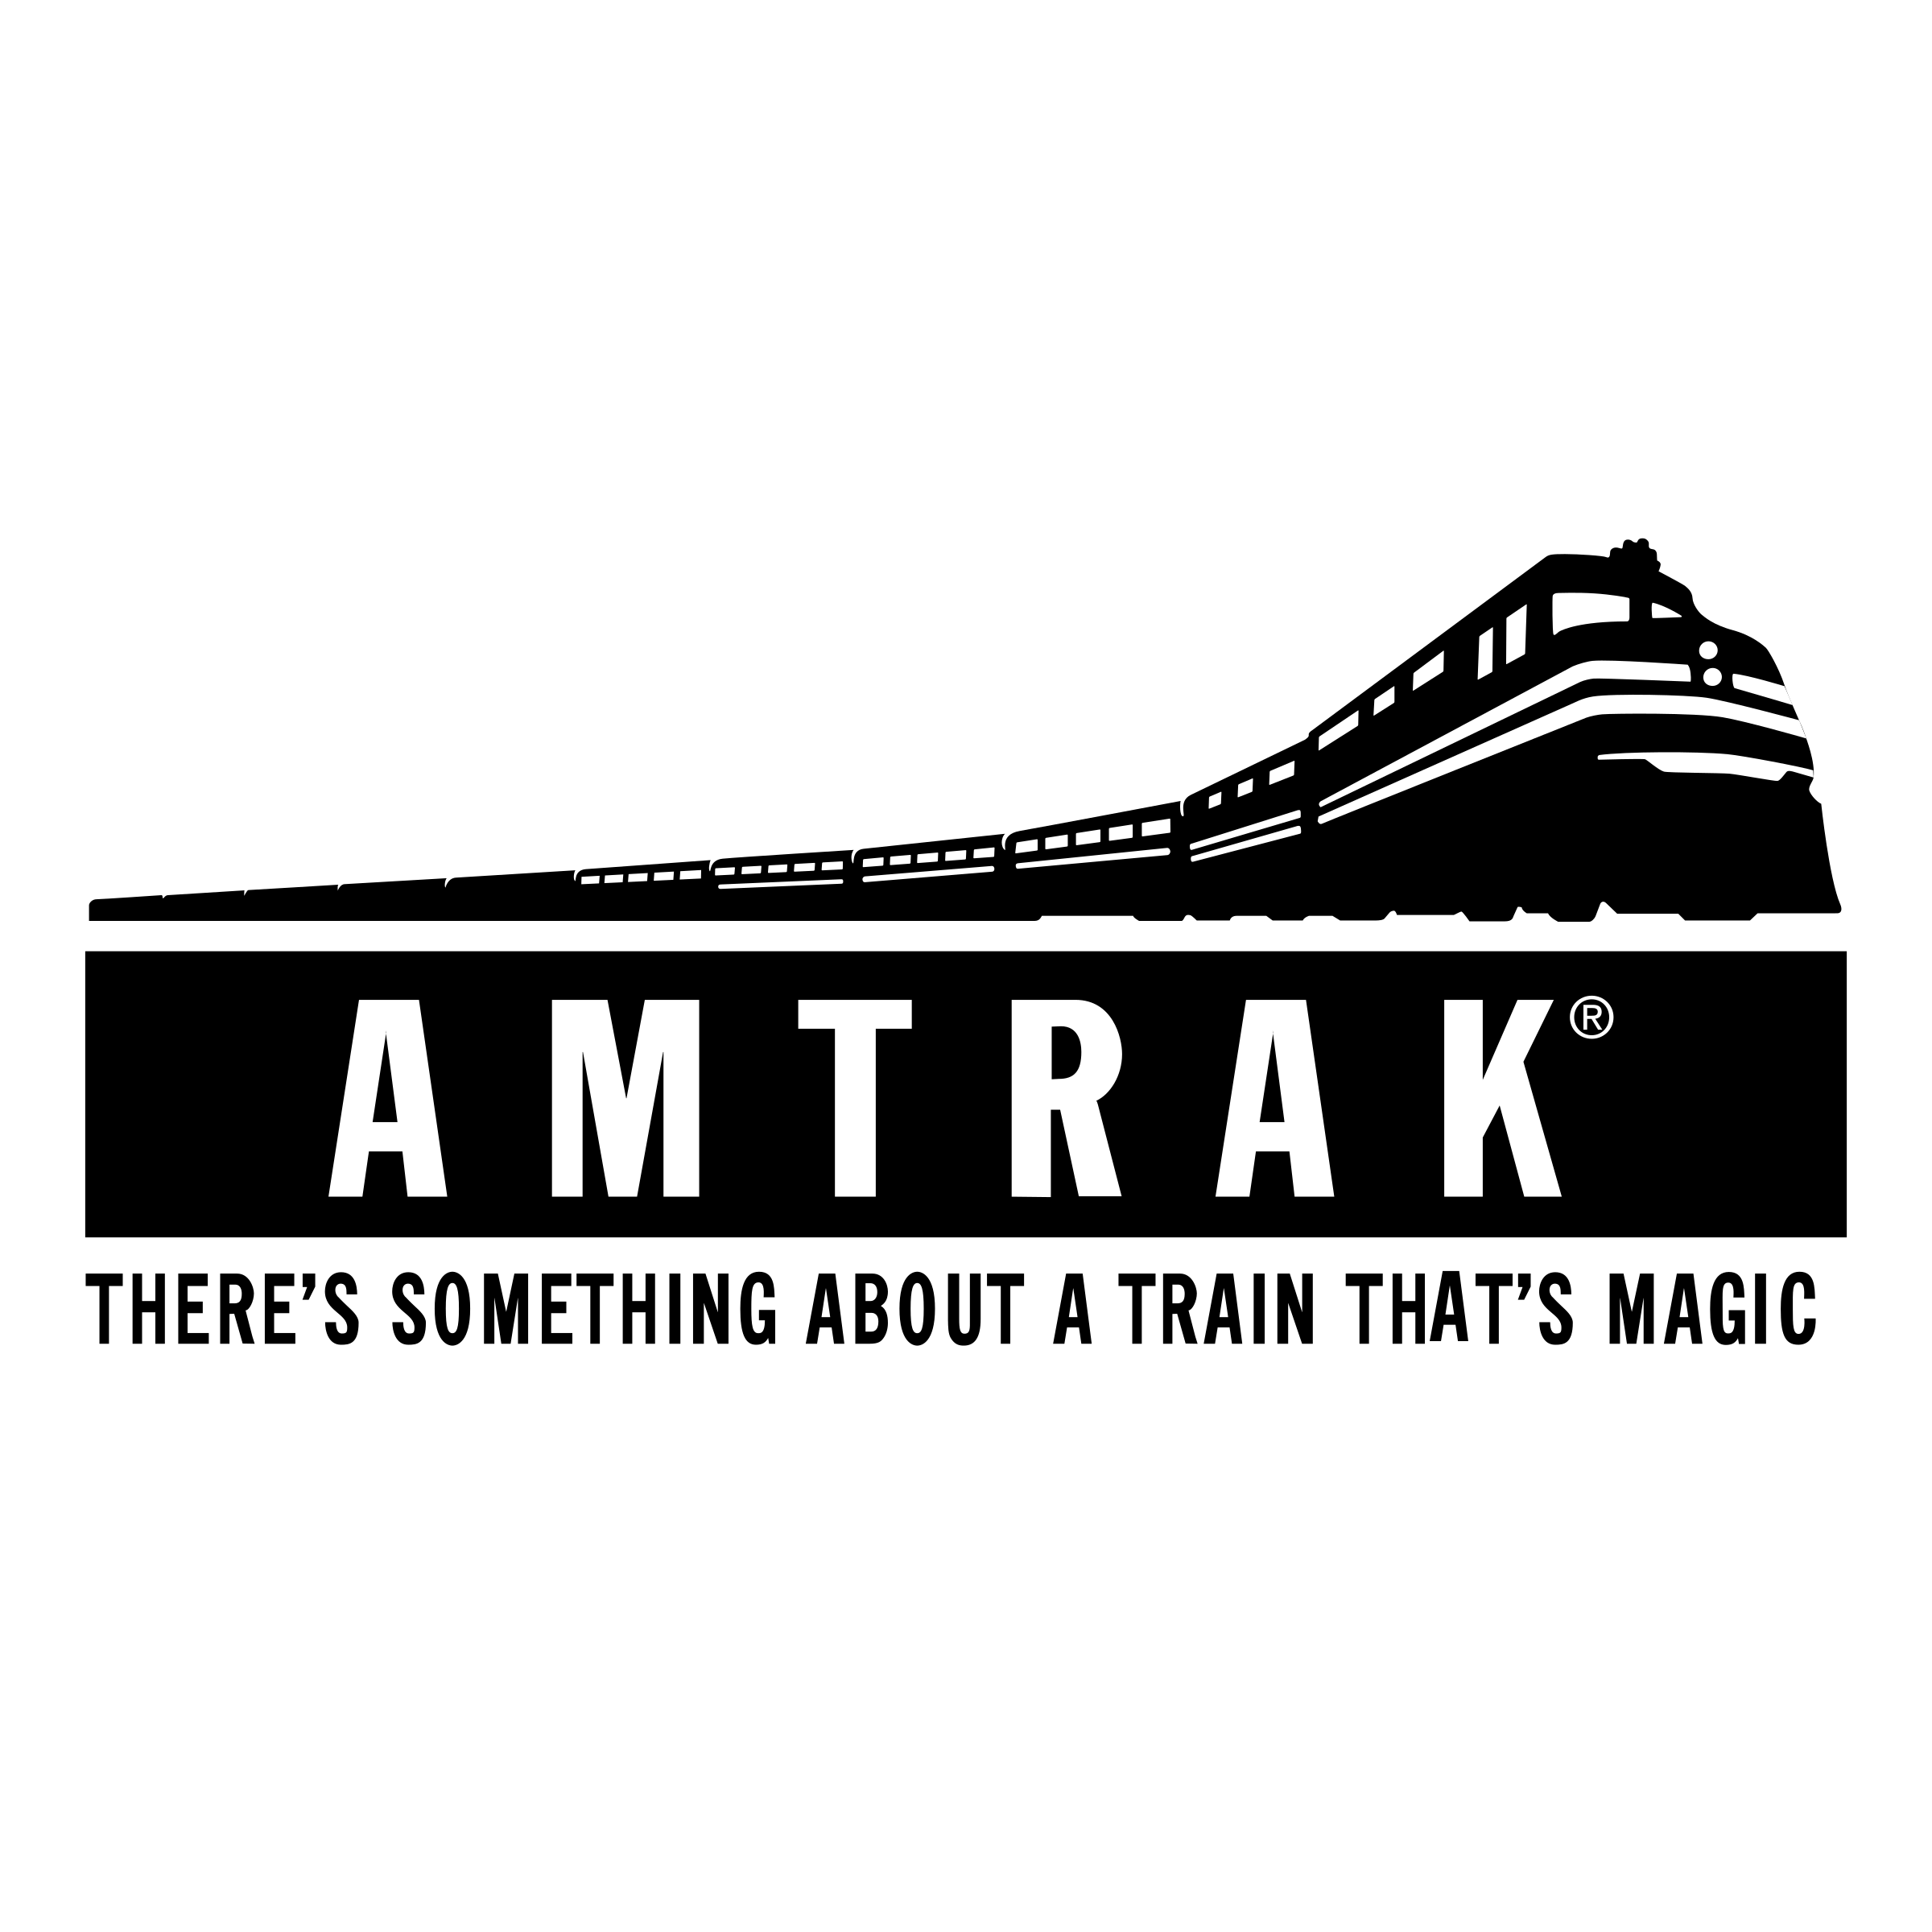 Amtrak Logo - Amtrak Logo PNG Transparent & SVG Vector - Freebie Supply